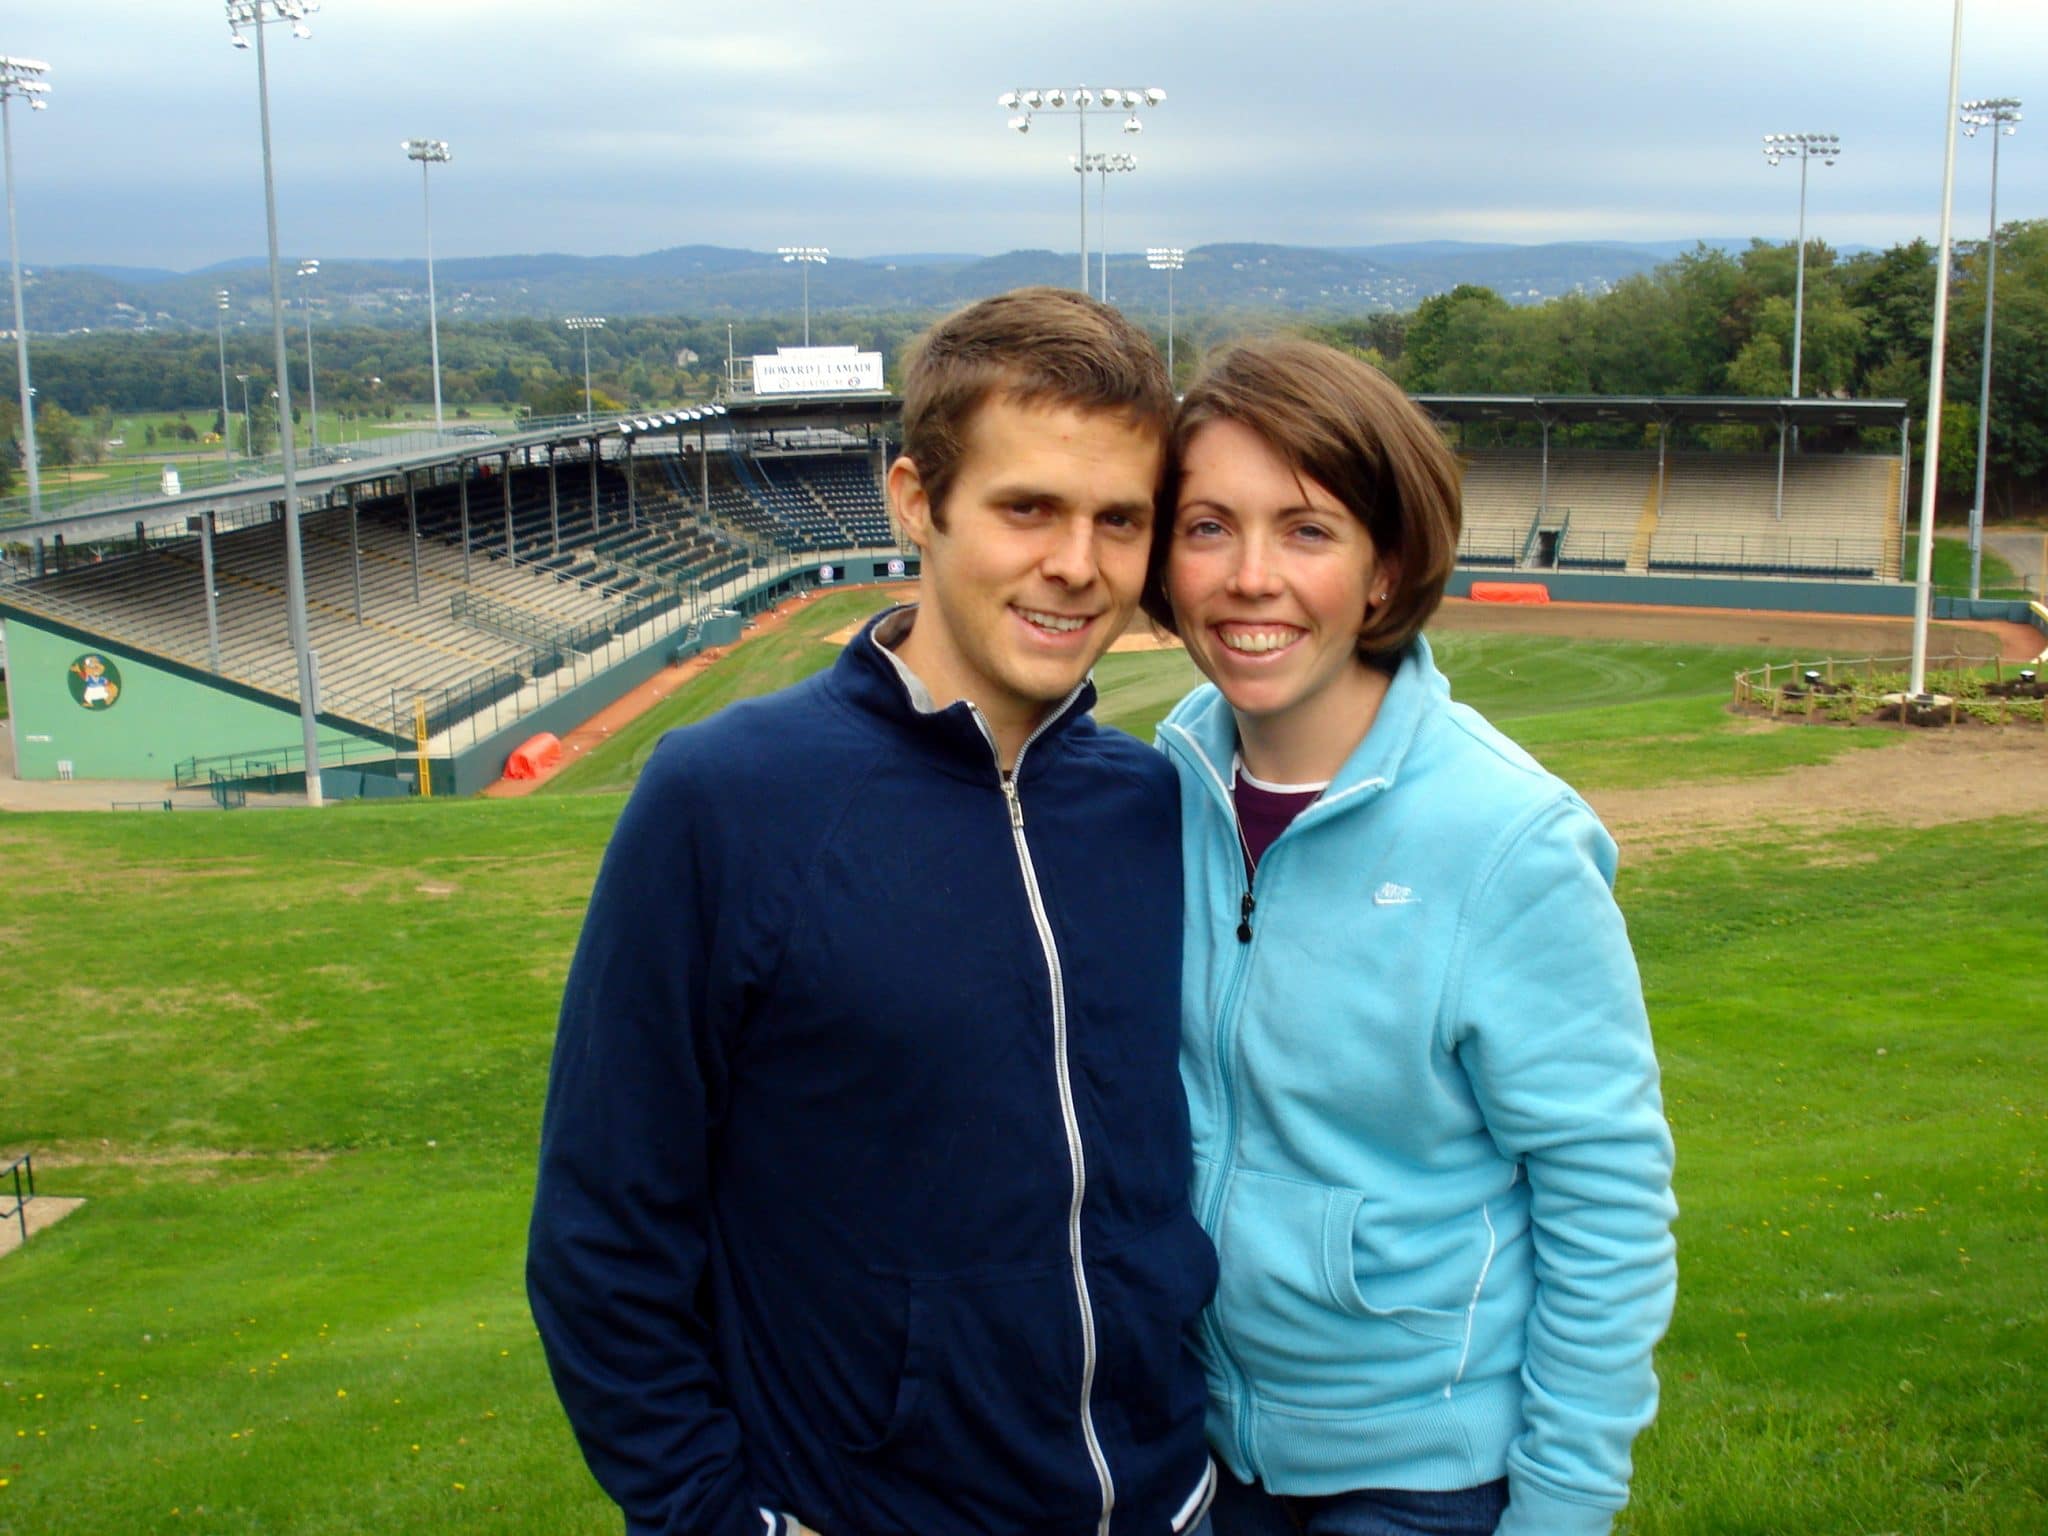 Matt and wife Erin posing in front of baseball stadium